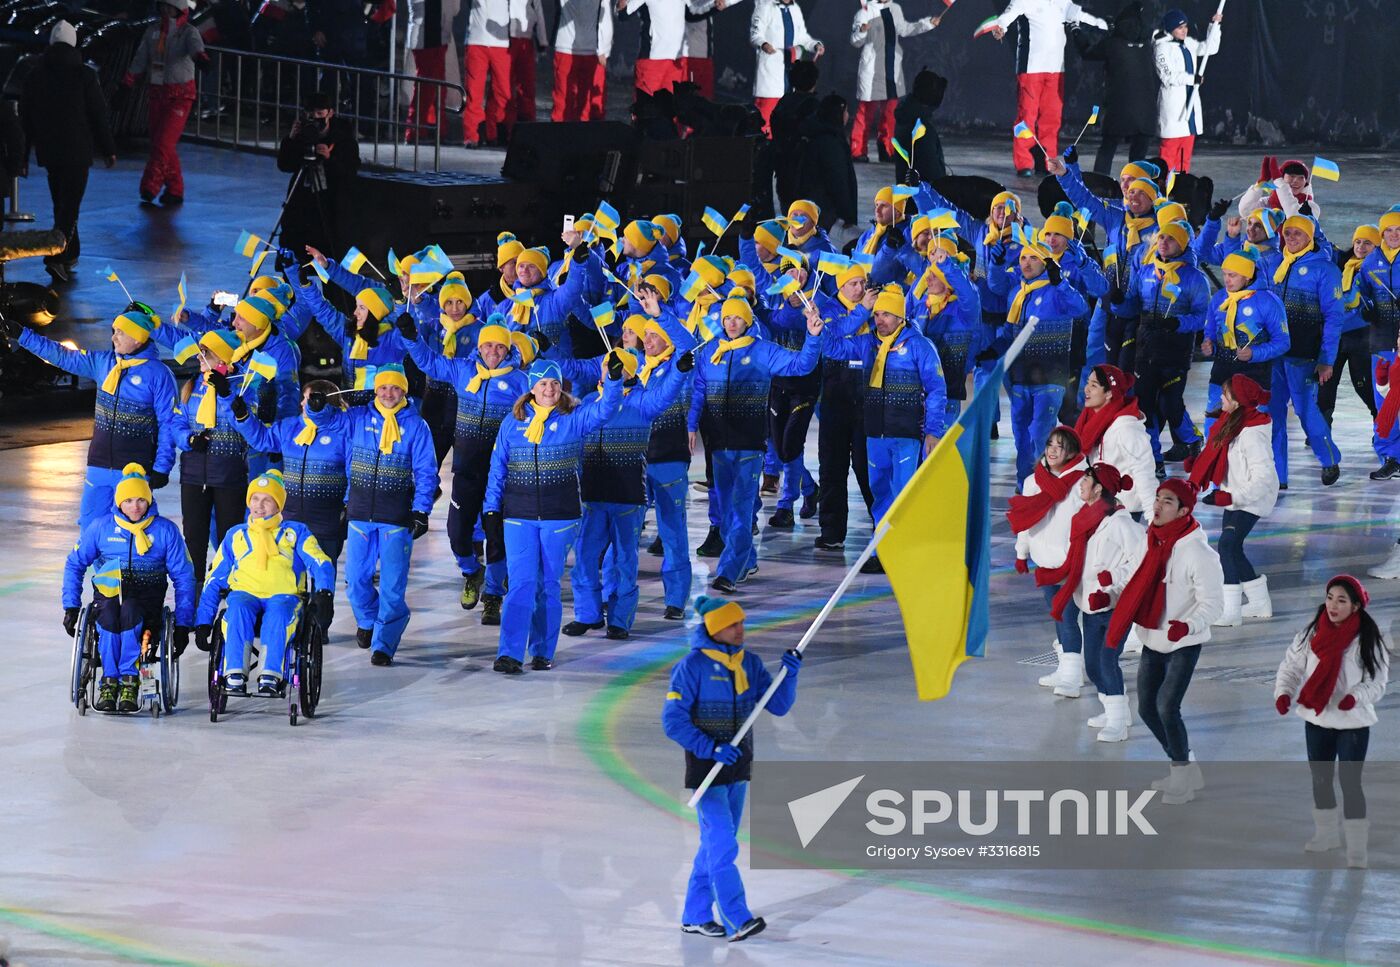 2018 Paralympics opening ceremony